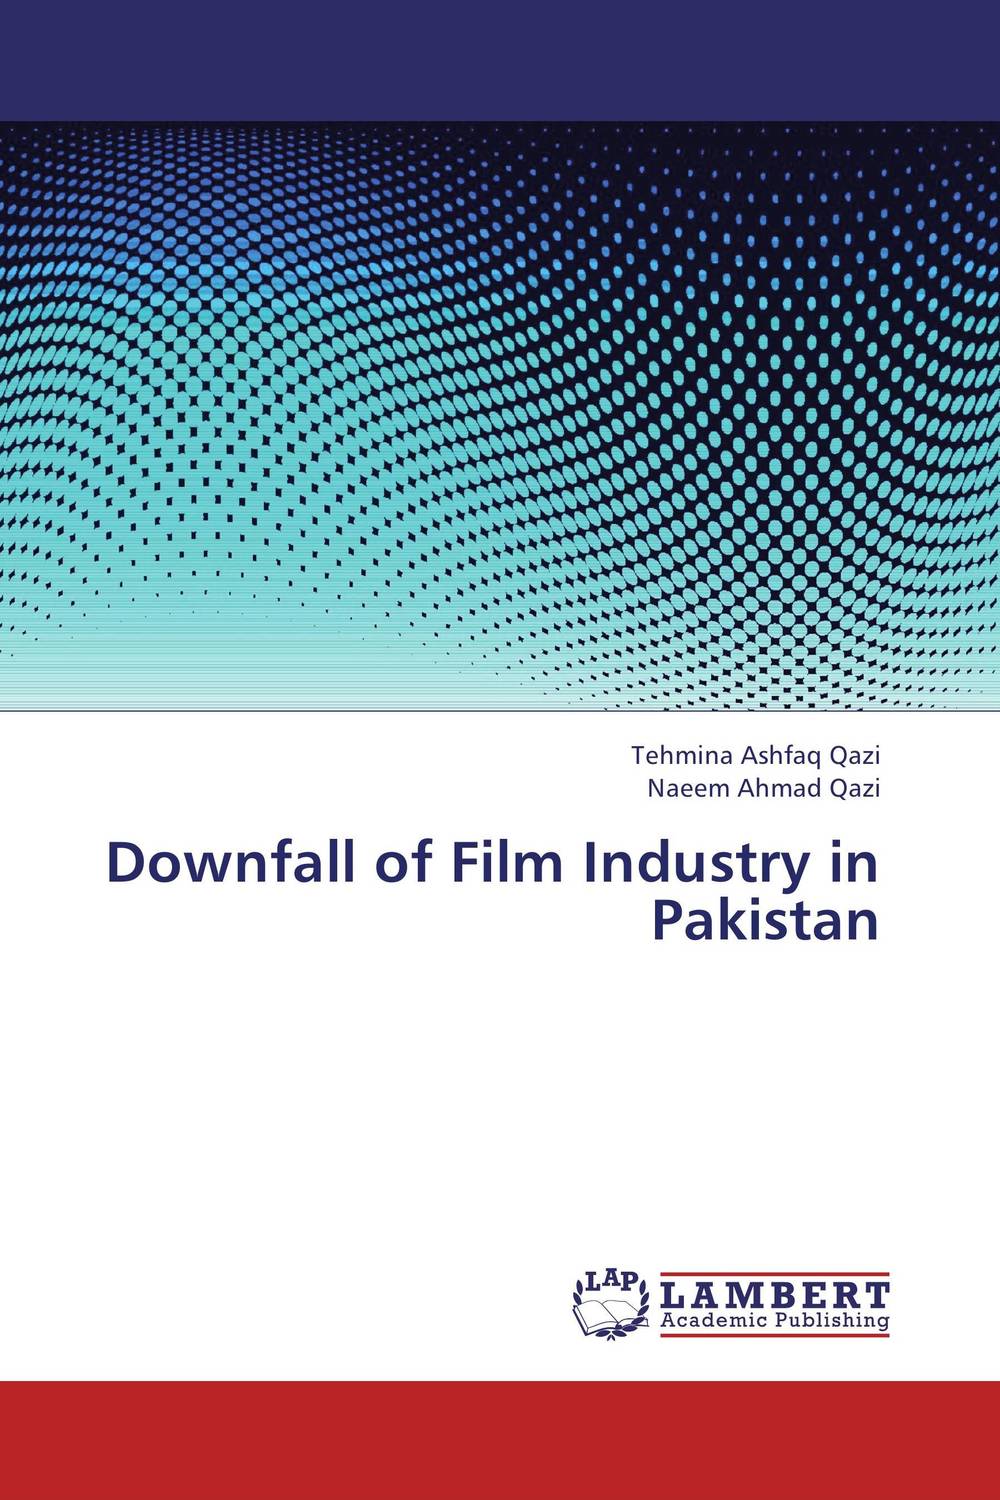 Downfall of Film Industry in Pakistan